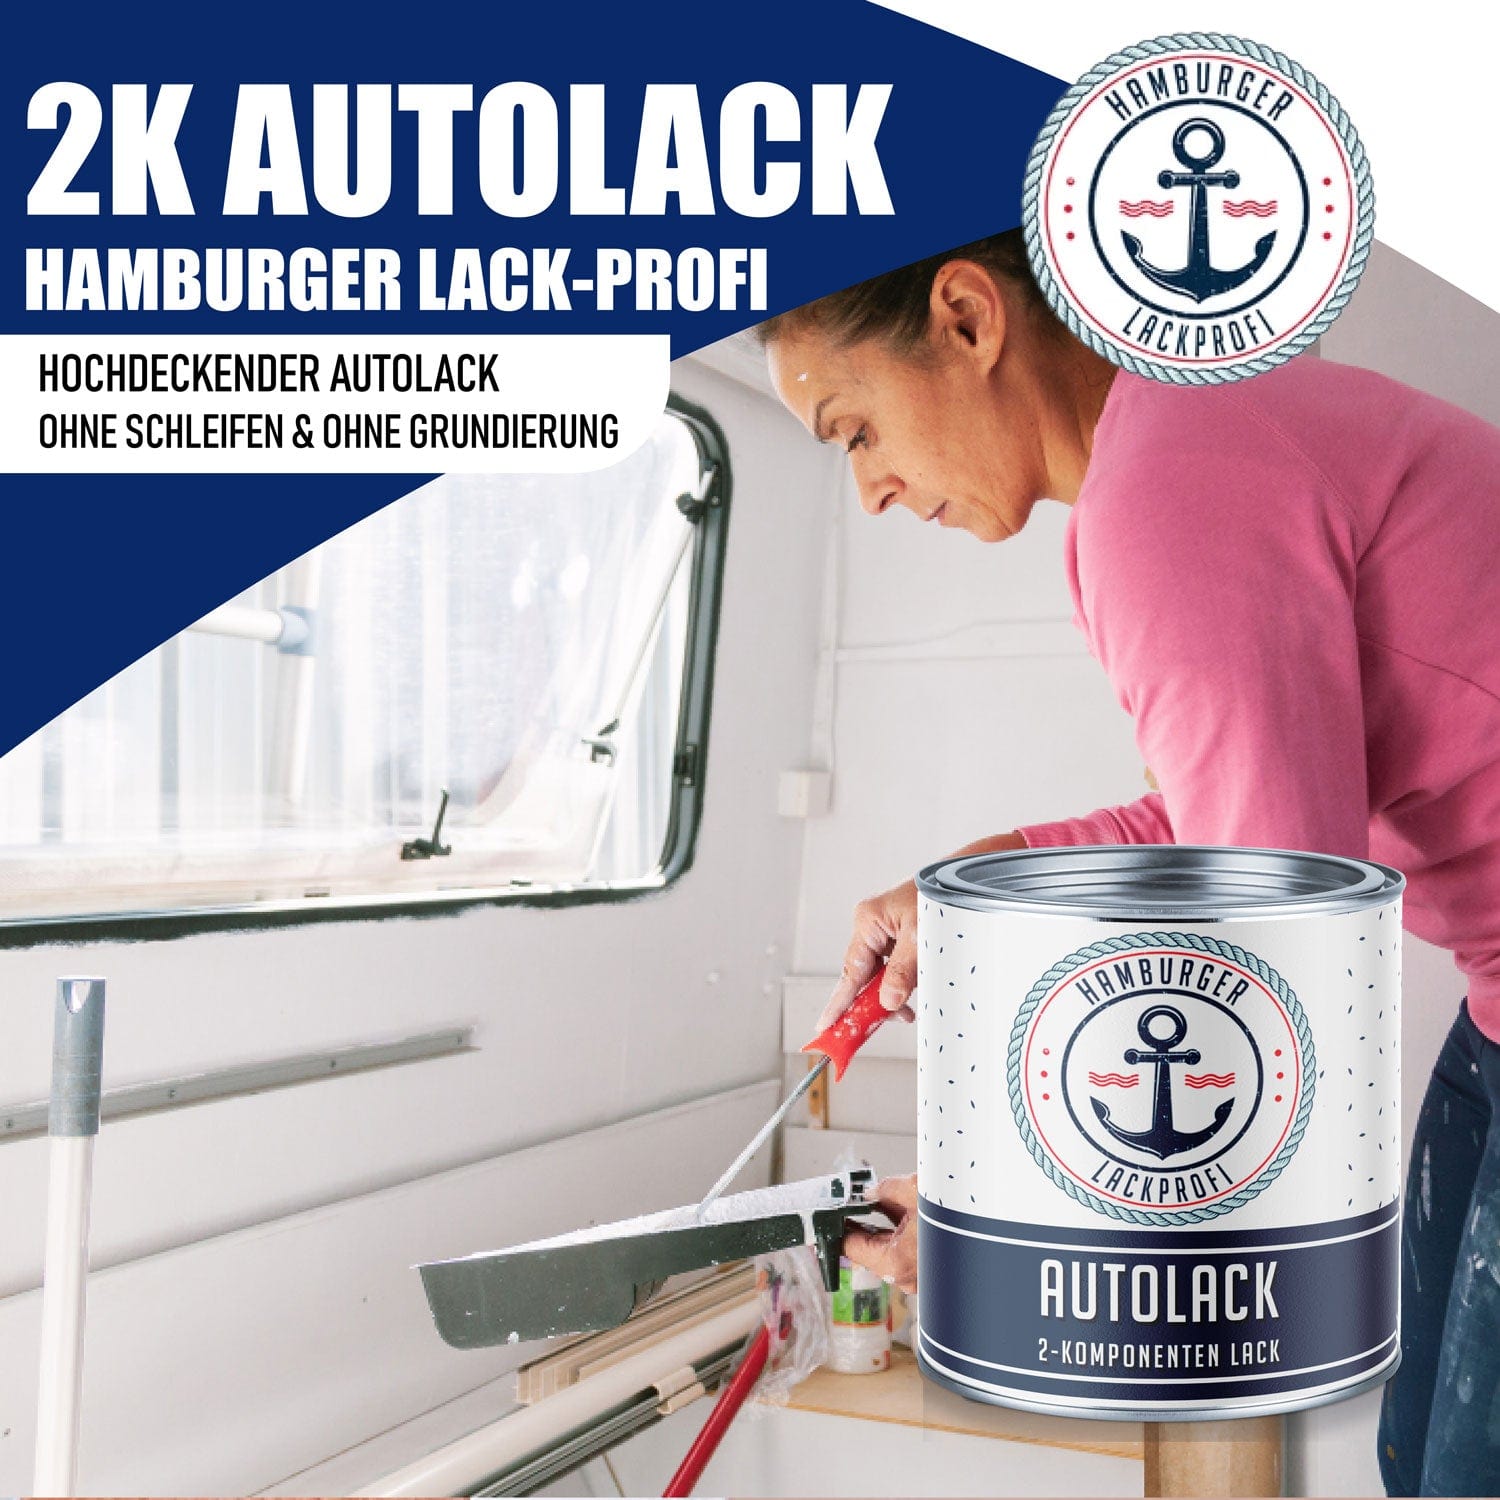 Hamburger Lack-Profi Lacke & Beschichtungen Hamburger Lack-Profi 2K Autolack in Telegrau 2 RAL 7046 mit Lackierset (X300) & Verdünnung (1 L) - 30% Sparangebot